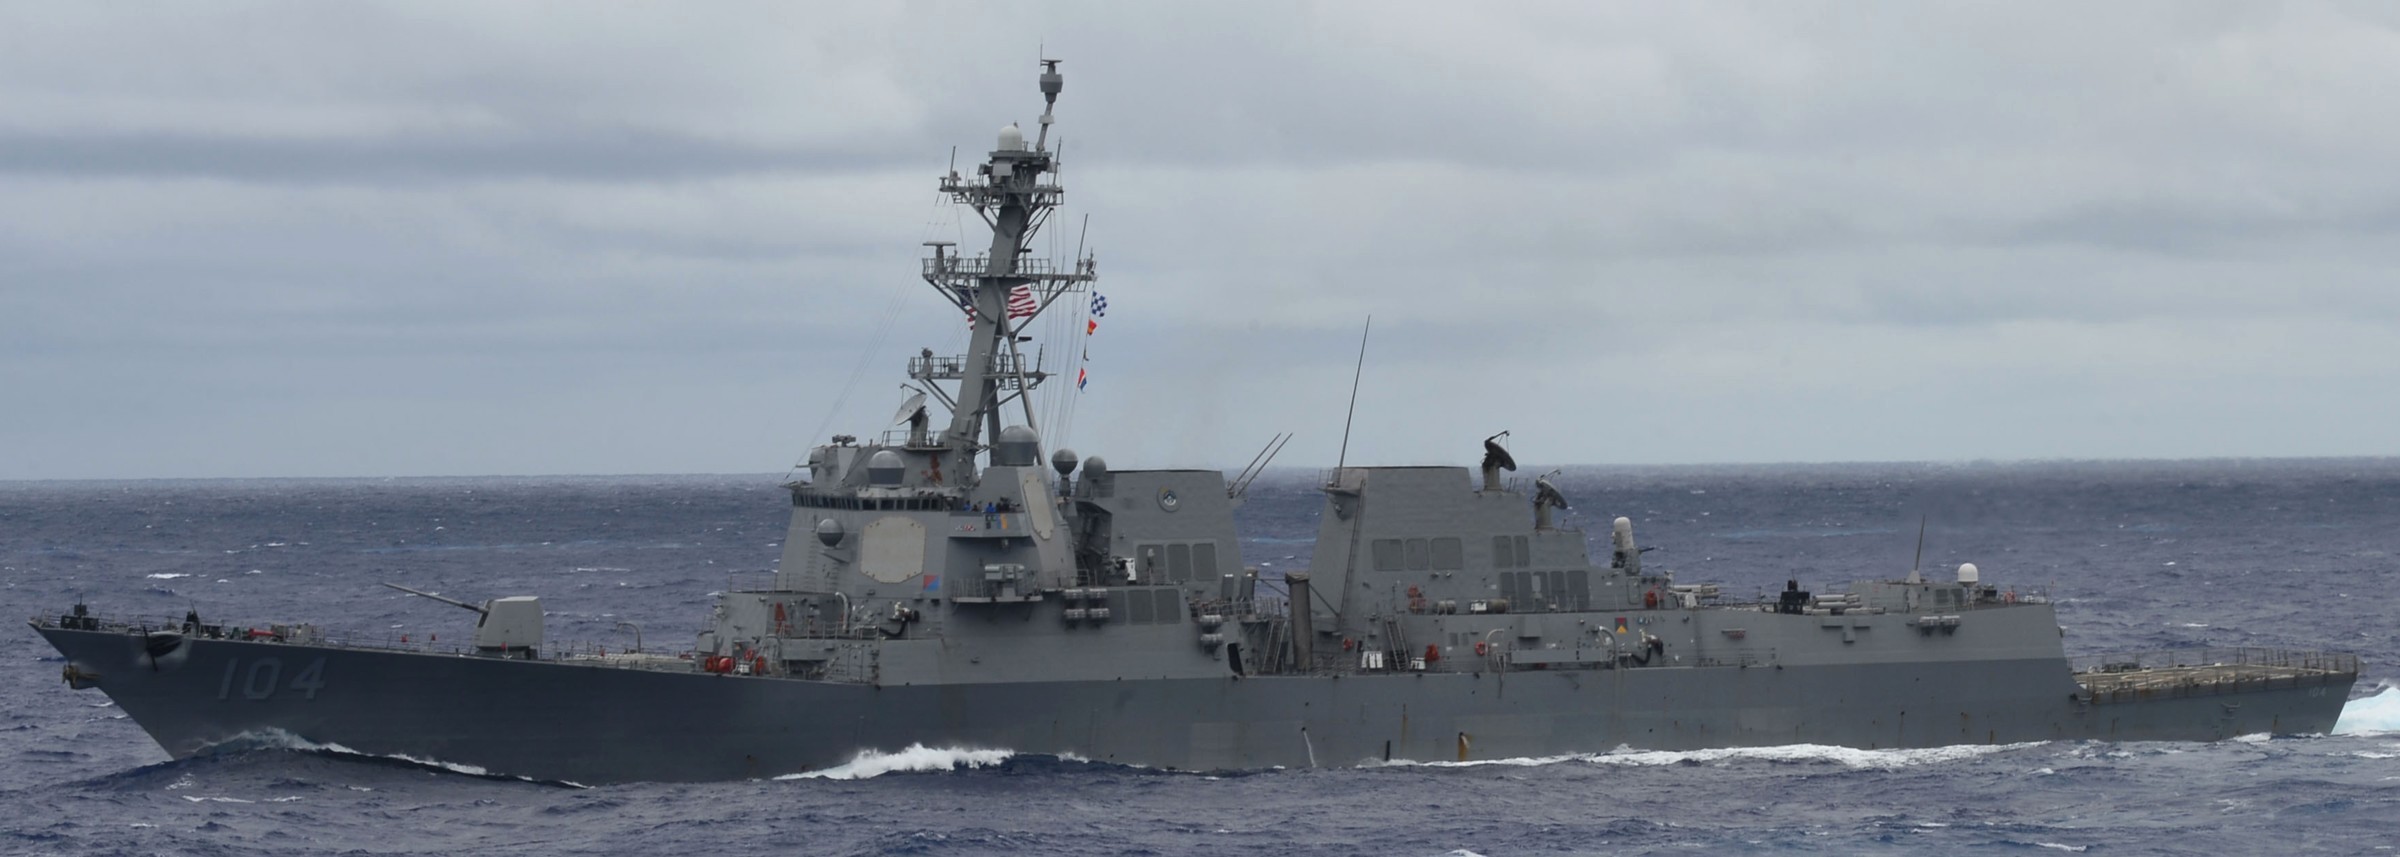 ddg-104 uss sterett arleigh burke class guided missile destroyer aegis us navy valiant shield 2014 16